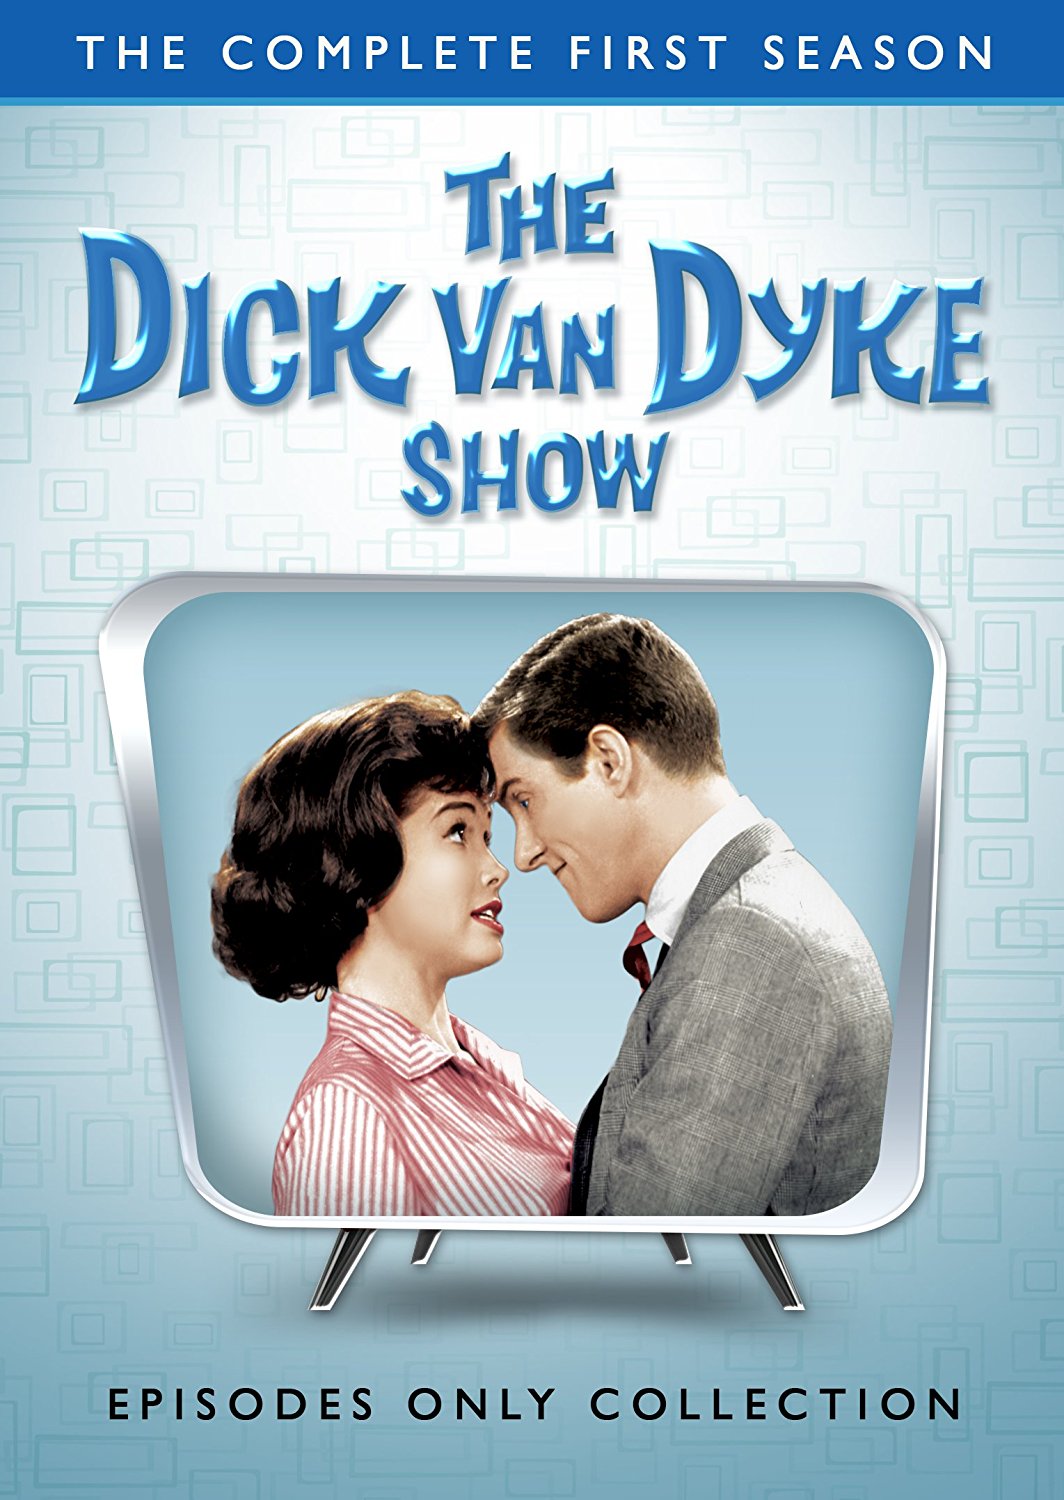 The dick van dyke show free episodes